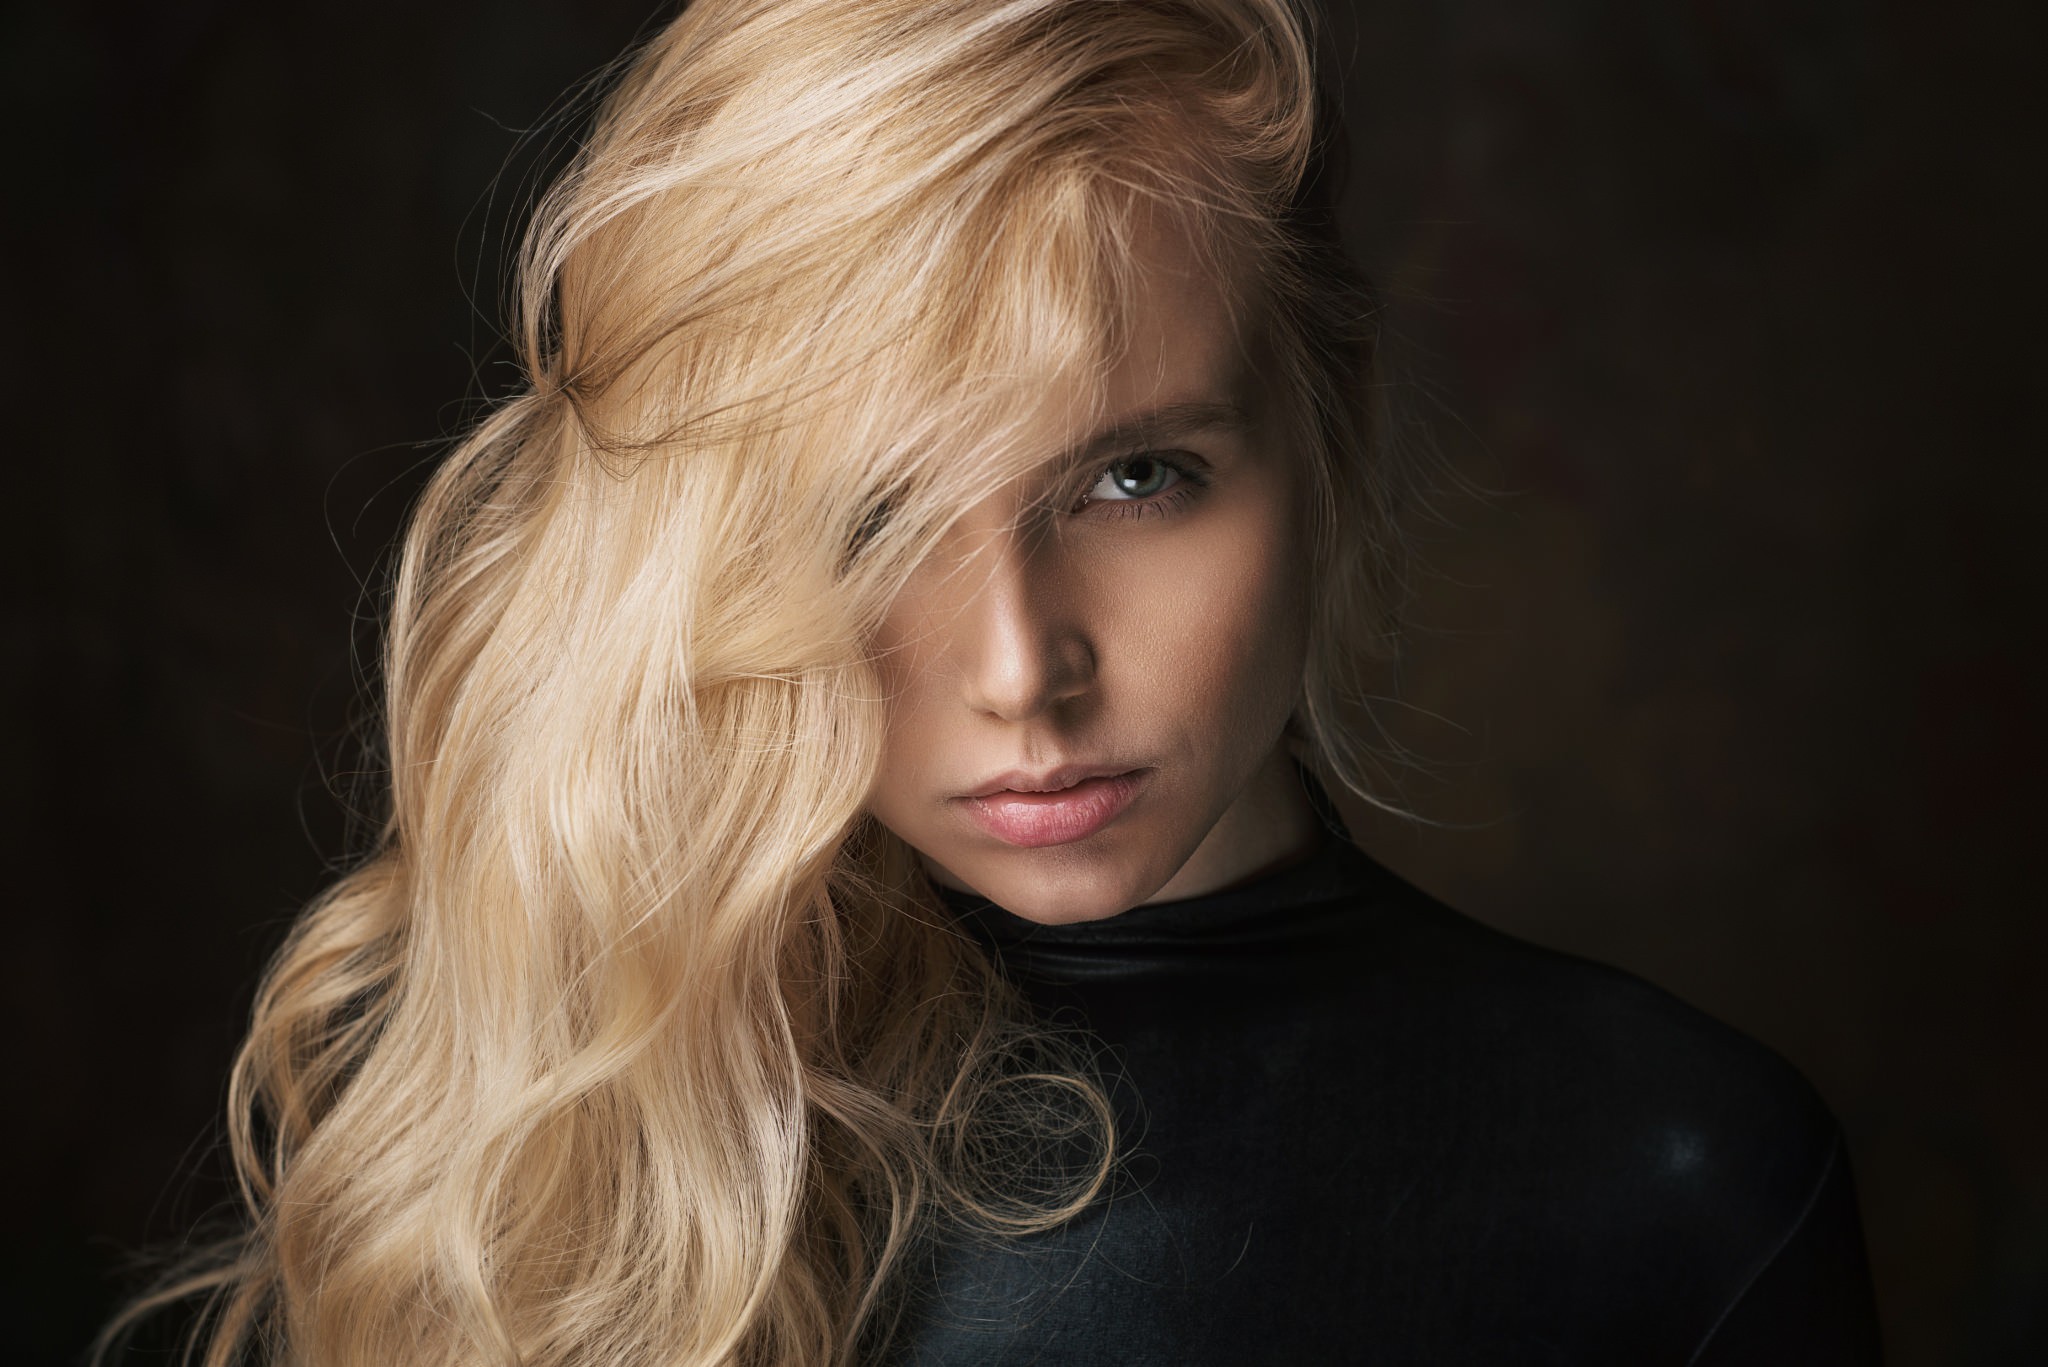 Maria Popova Women Blonde Face Portrait Model Hair In Face Black Clothing Black Clothes Leather Clot 2048x1367